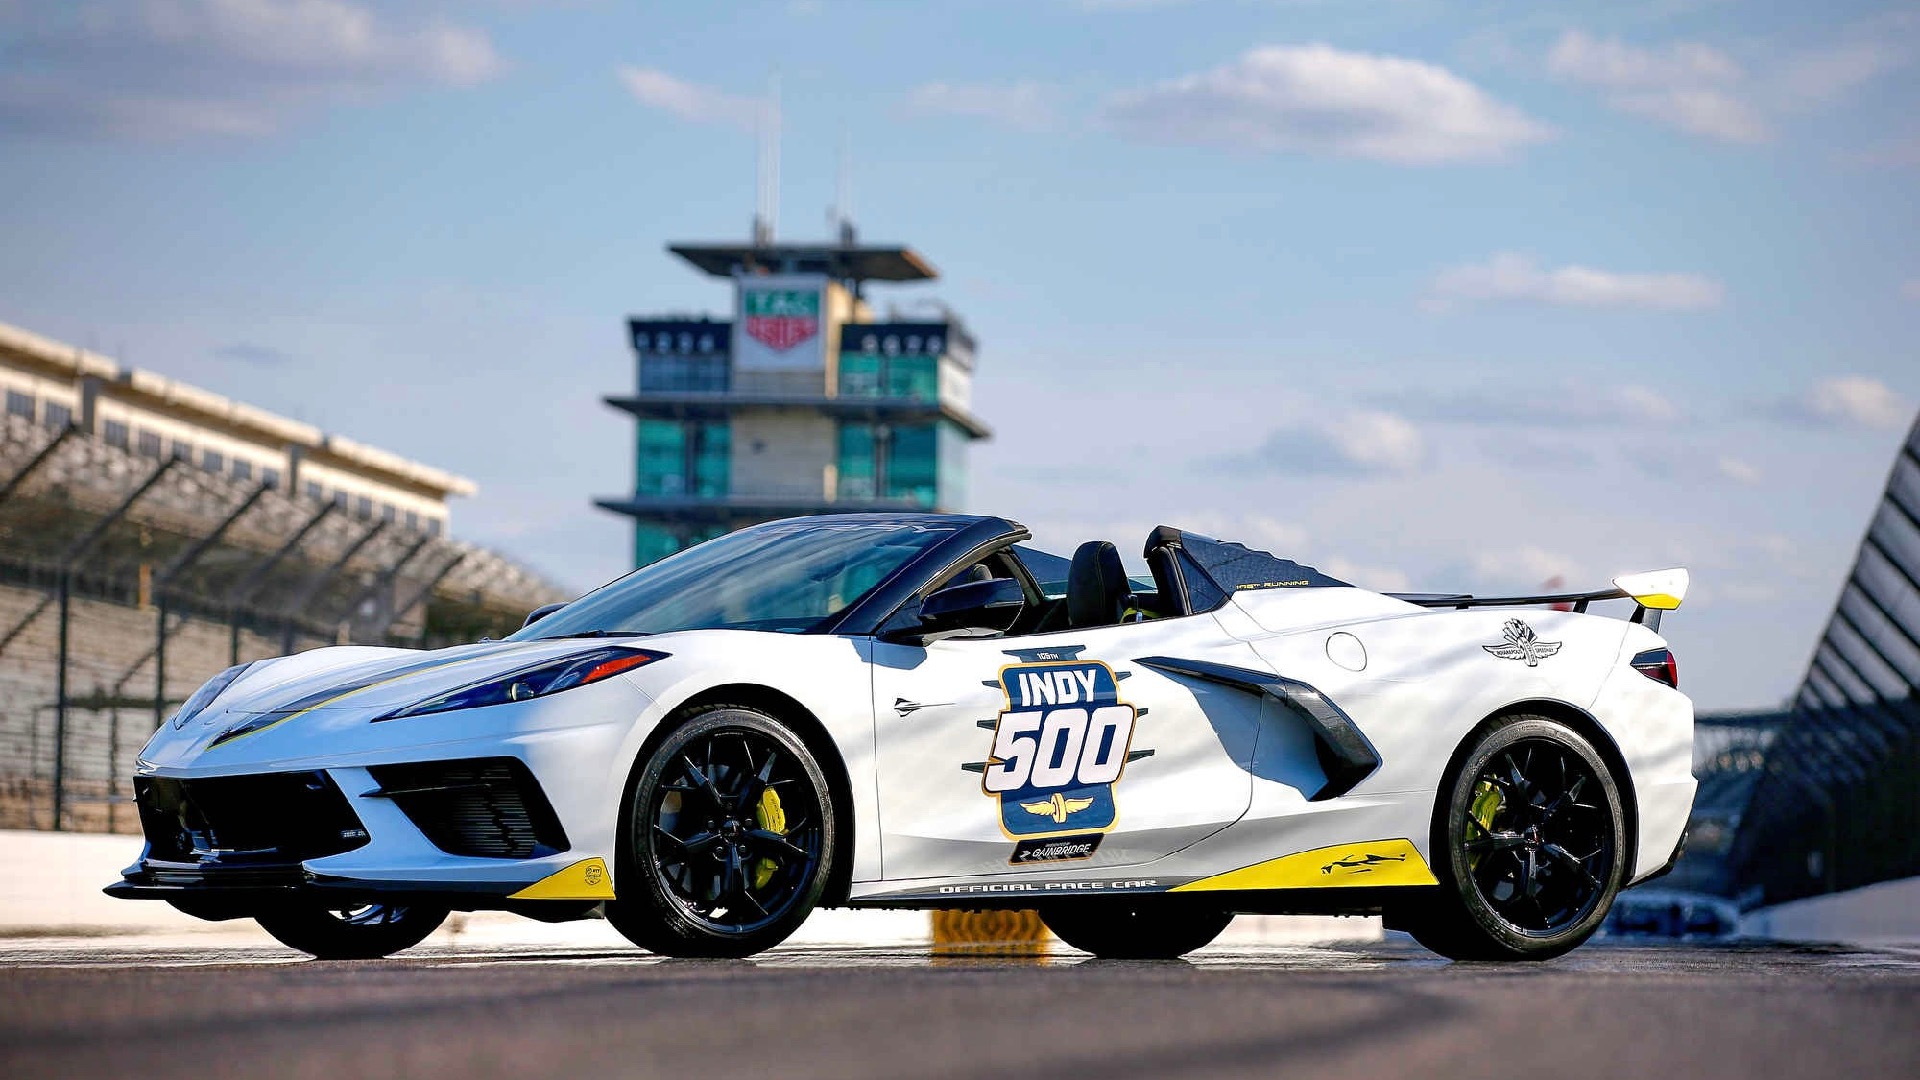 2021 Chevrolet Corvette Stingray convertible Indianapolis 500 pace car